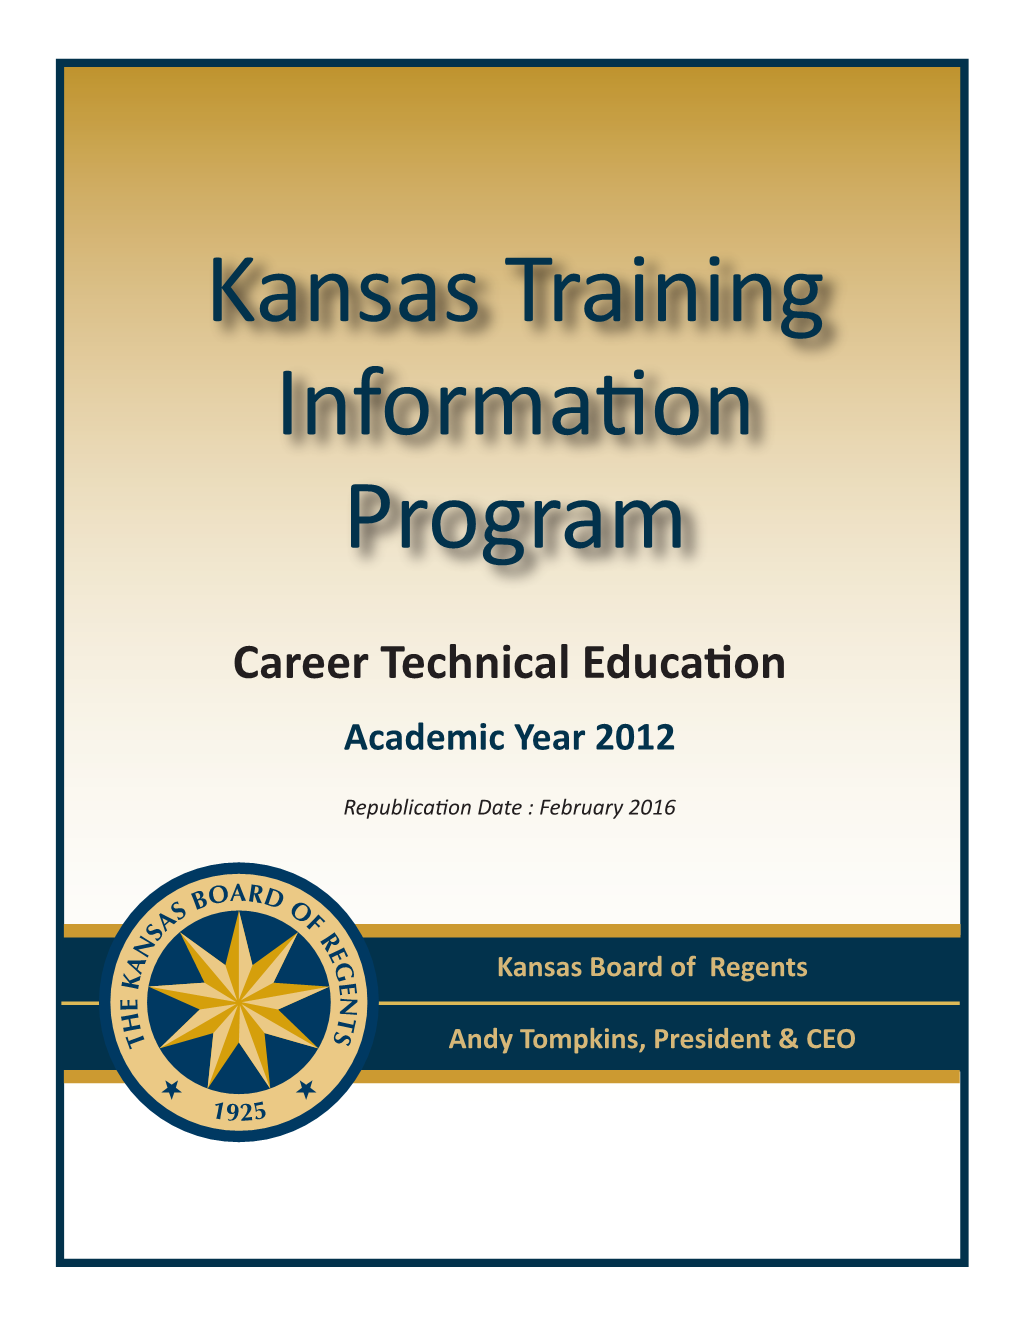 Kansas Training Information Program